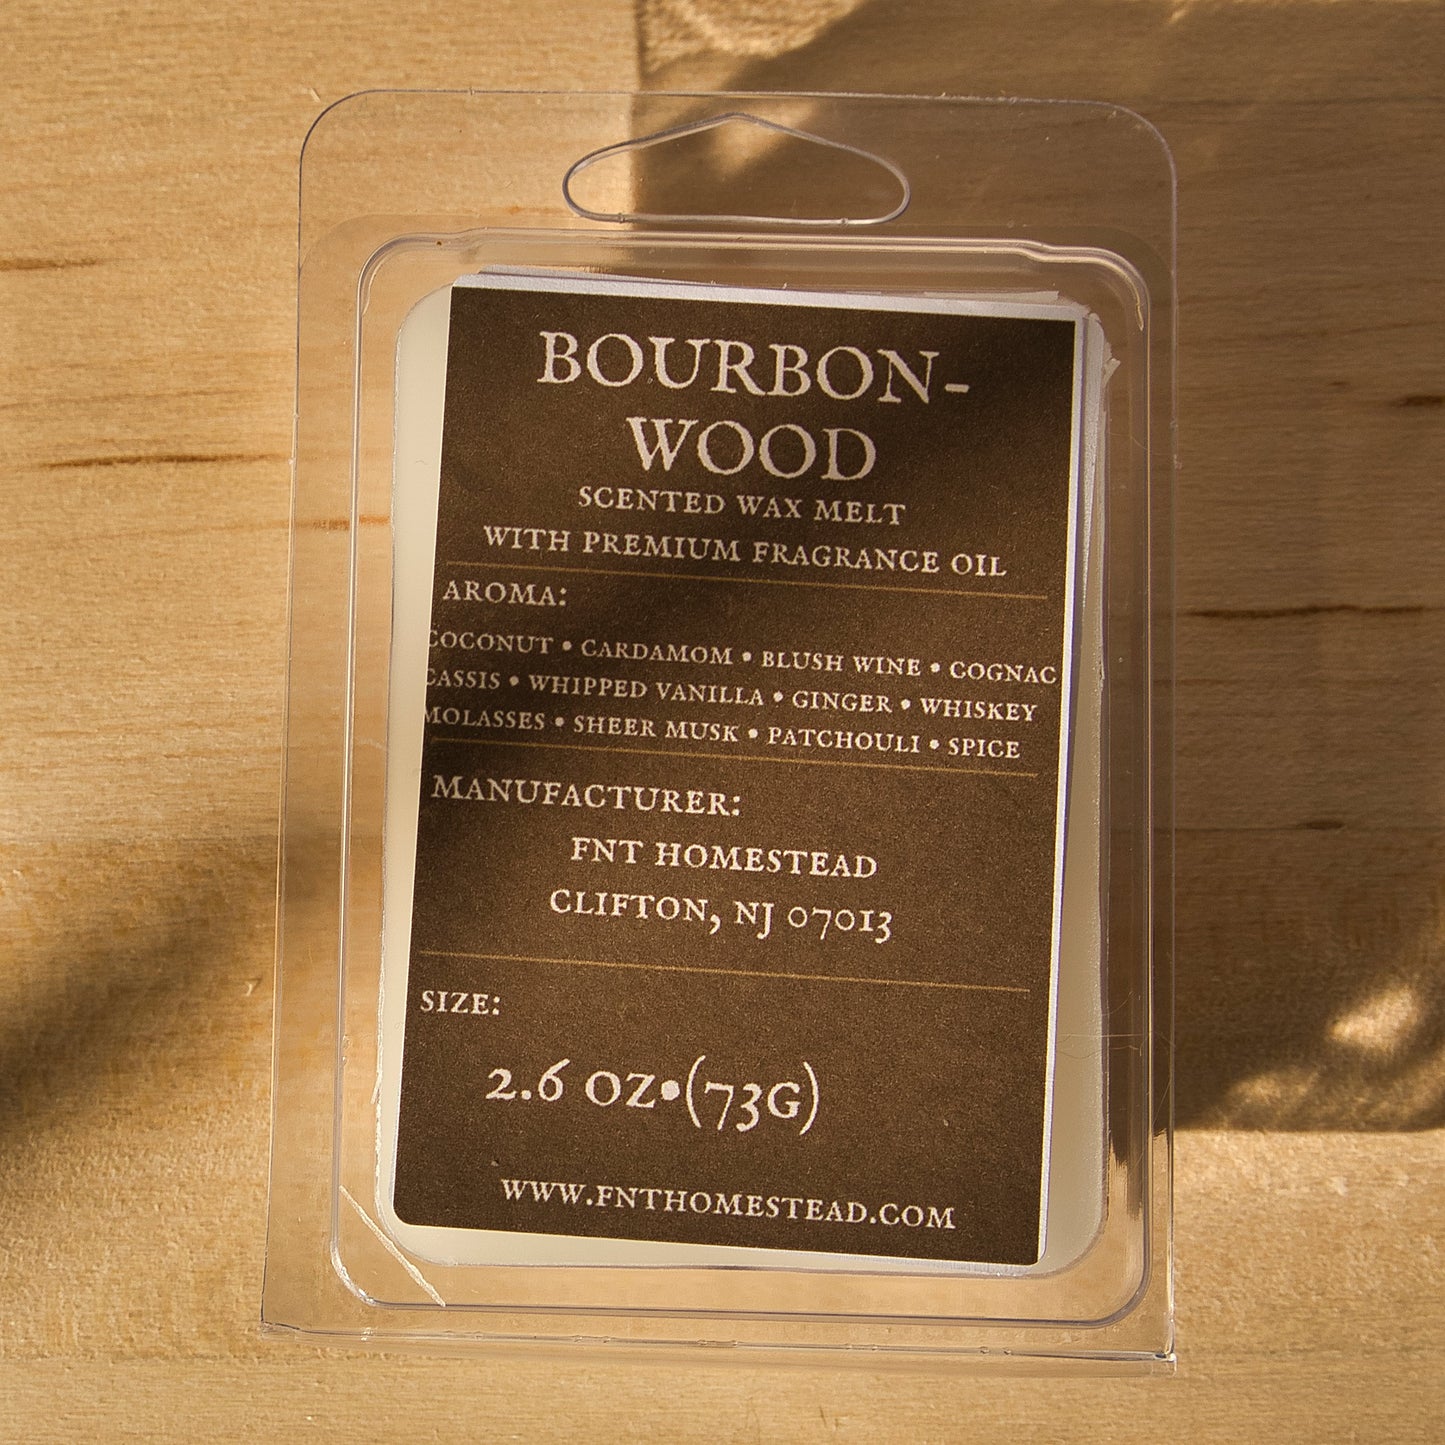 Bourbonwood Wax Melt